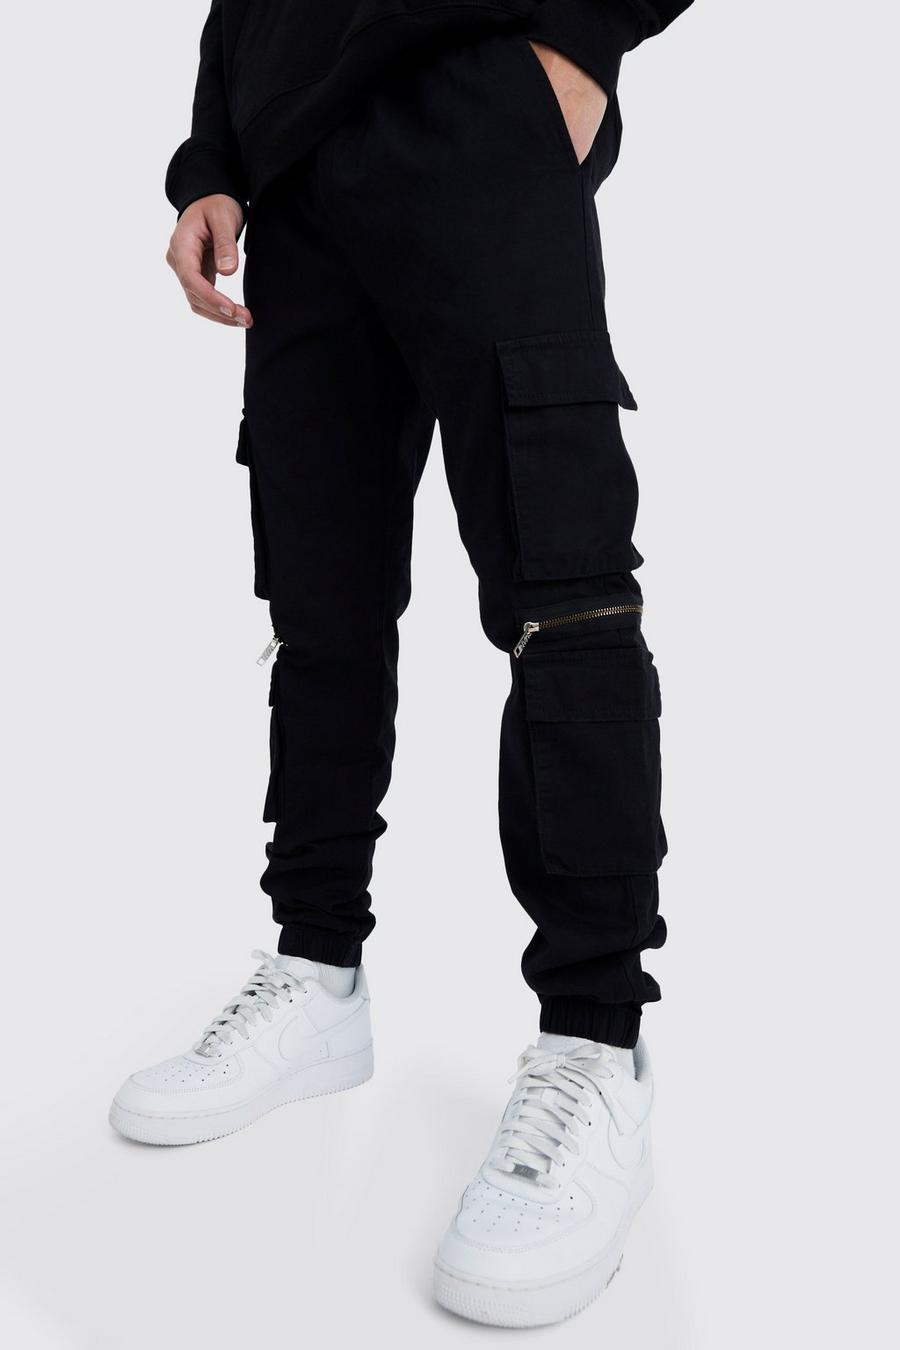 Cargo Trousers Men's Bottom Tight Men's Loose Cotton Plus Size Pocket Solid  Elastic Waist Pants Overall Pants, black, M : : Fashion